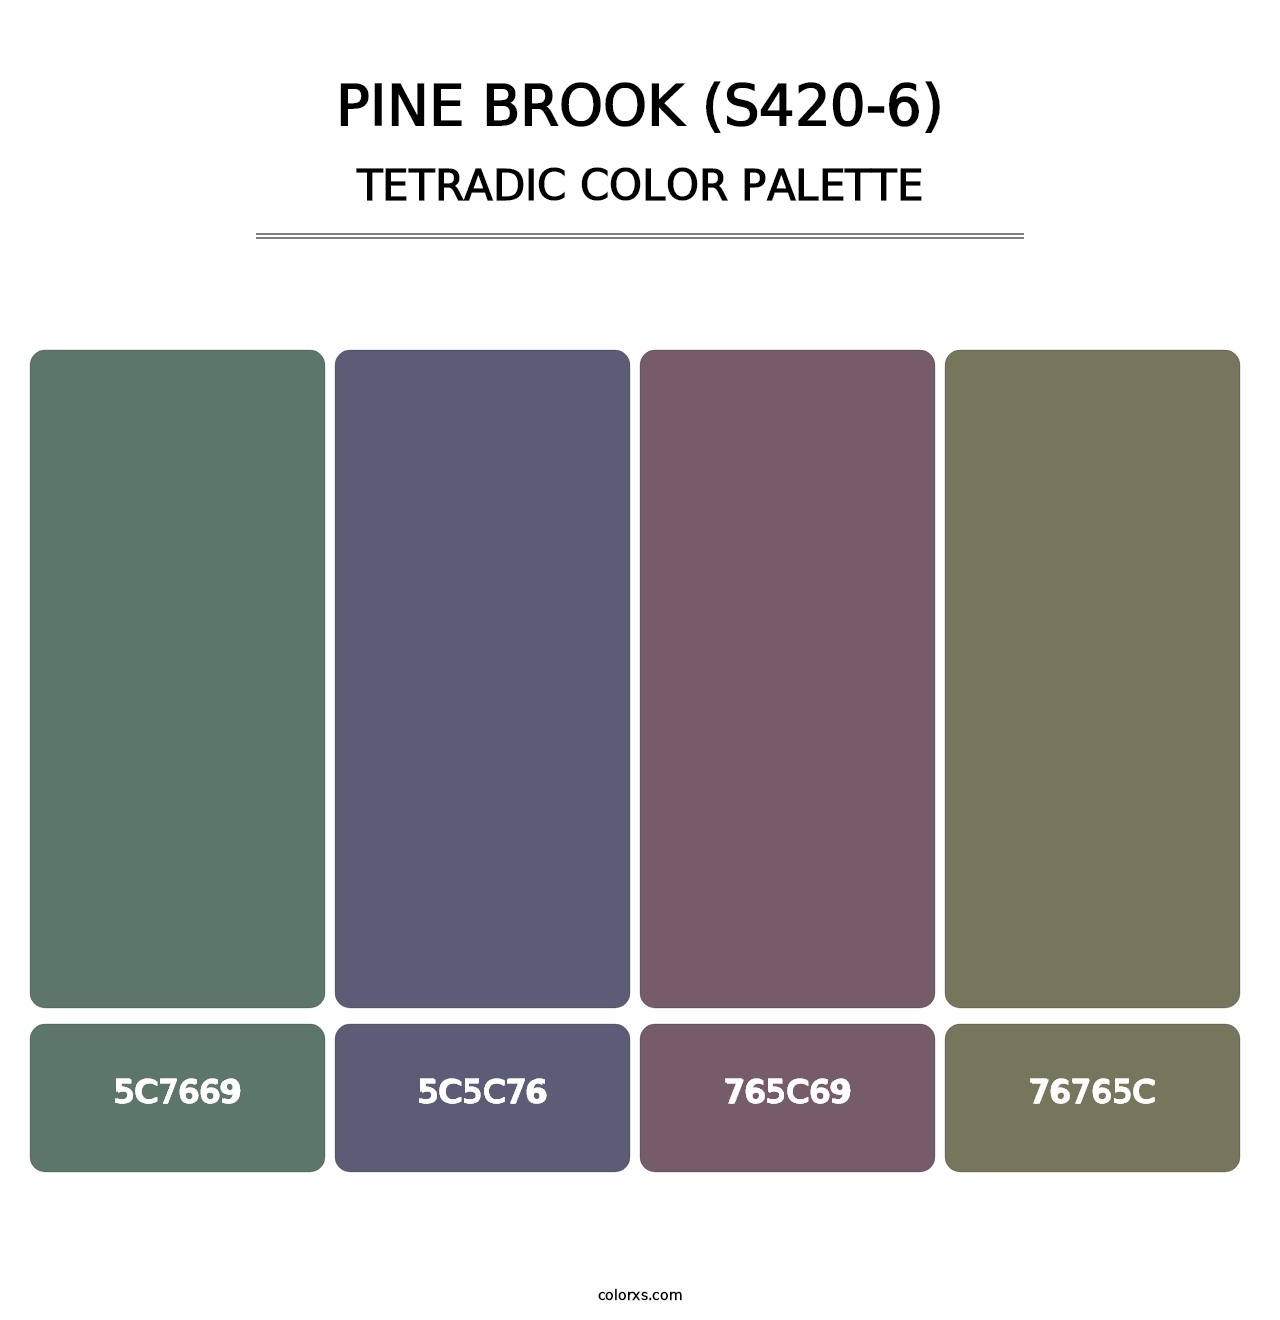 Pine Brook (S420-6) - Tetradic Color Palette